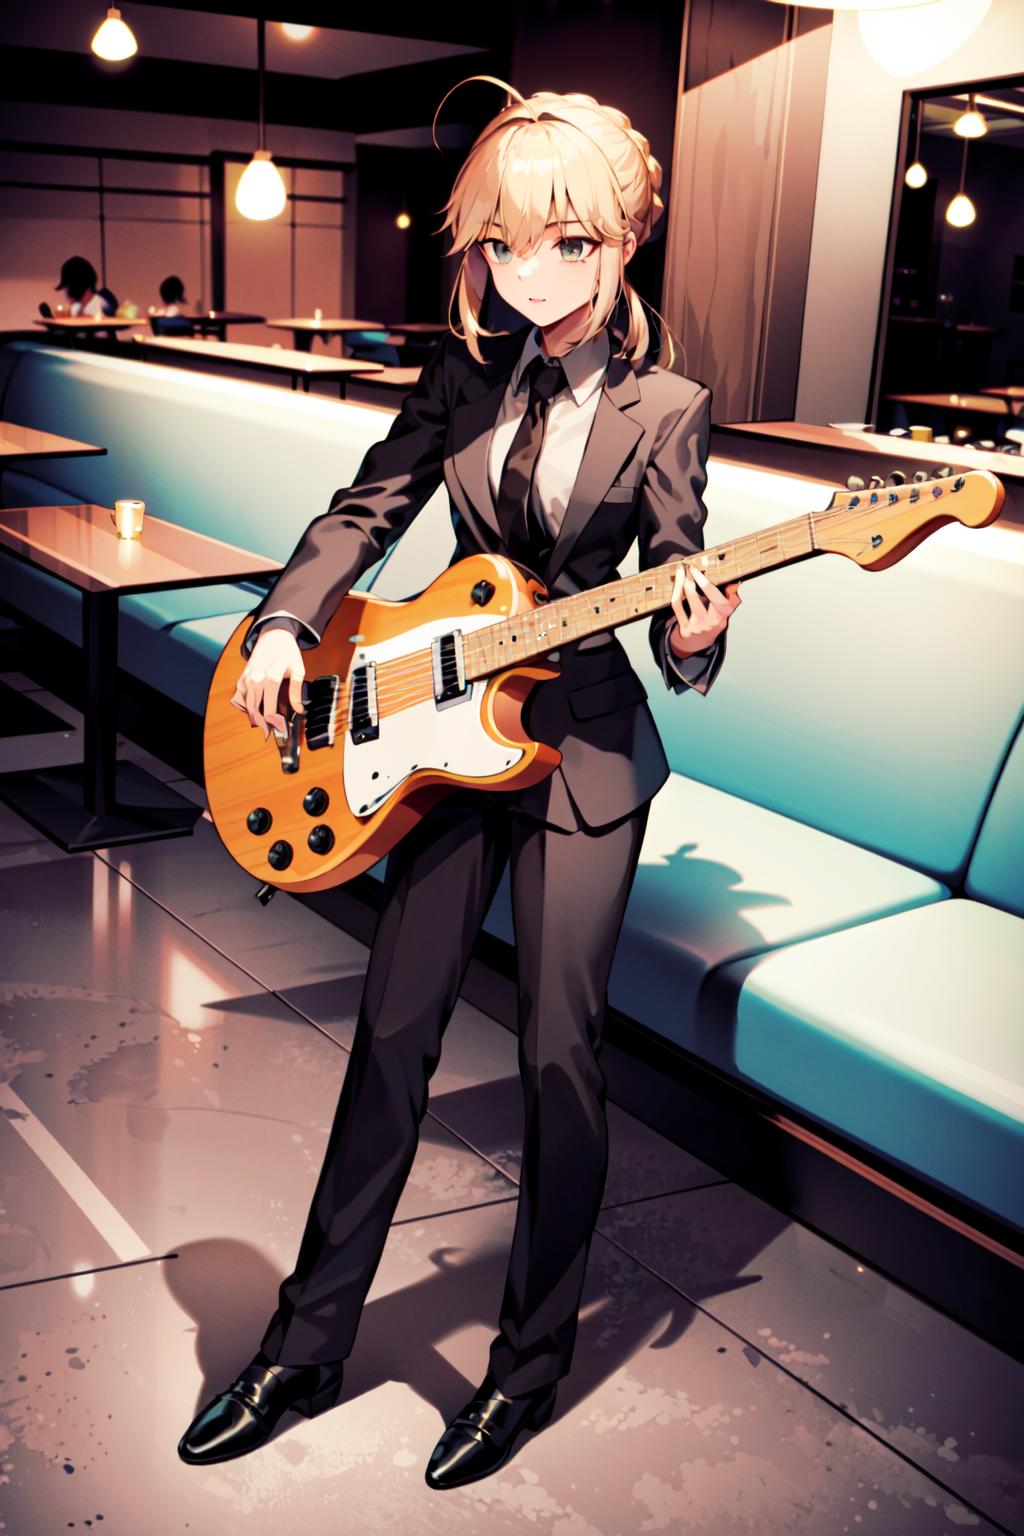 Girl with guitar digital art. Anime girl. Cute girl